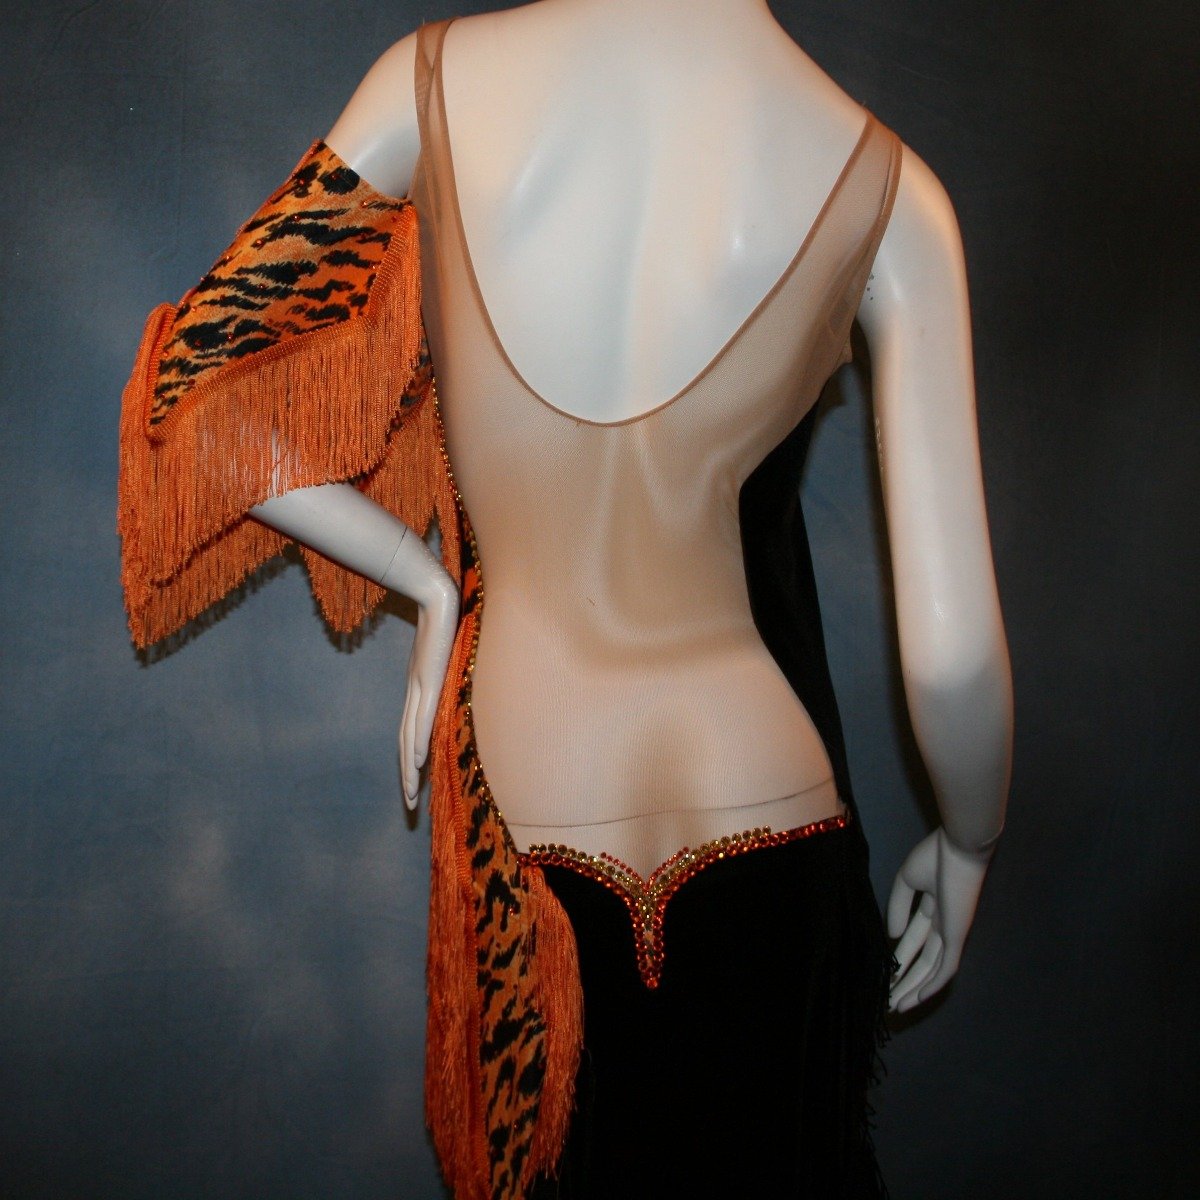 Crystal's Creations back close up view of orange & black tiger print Latin/rhythm dress with fringe